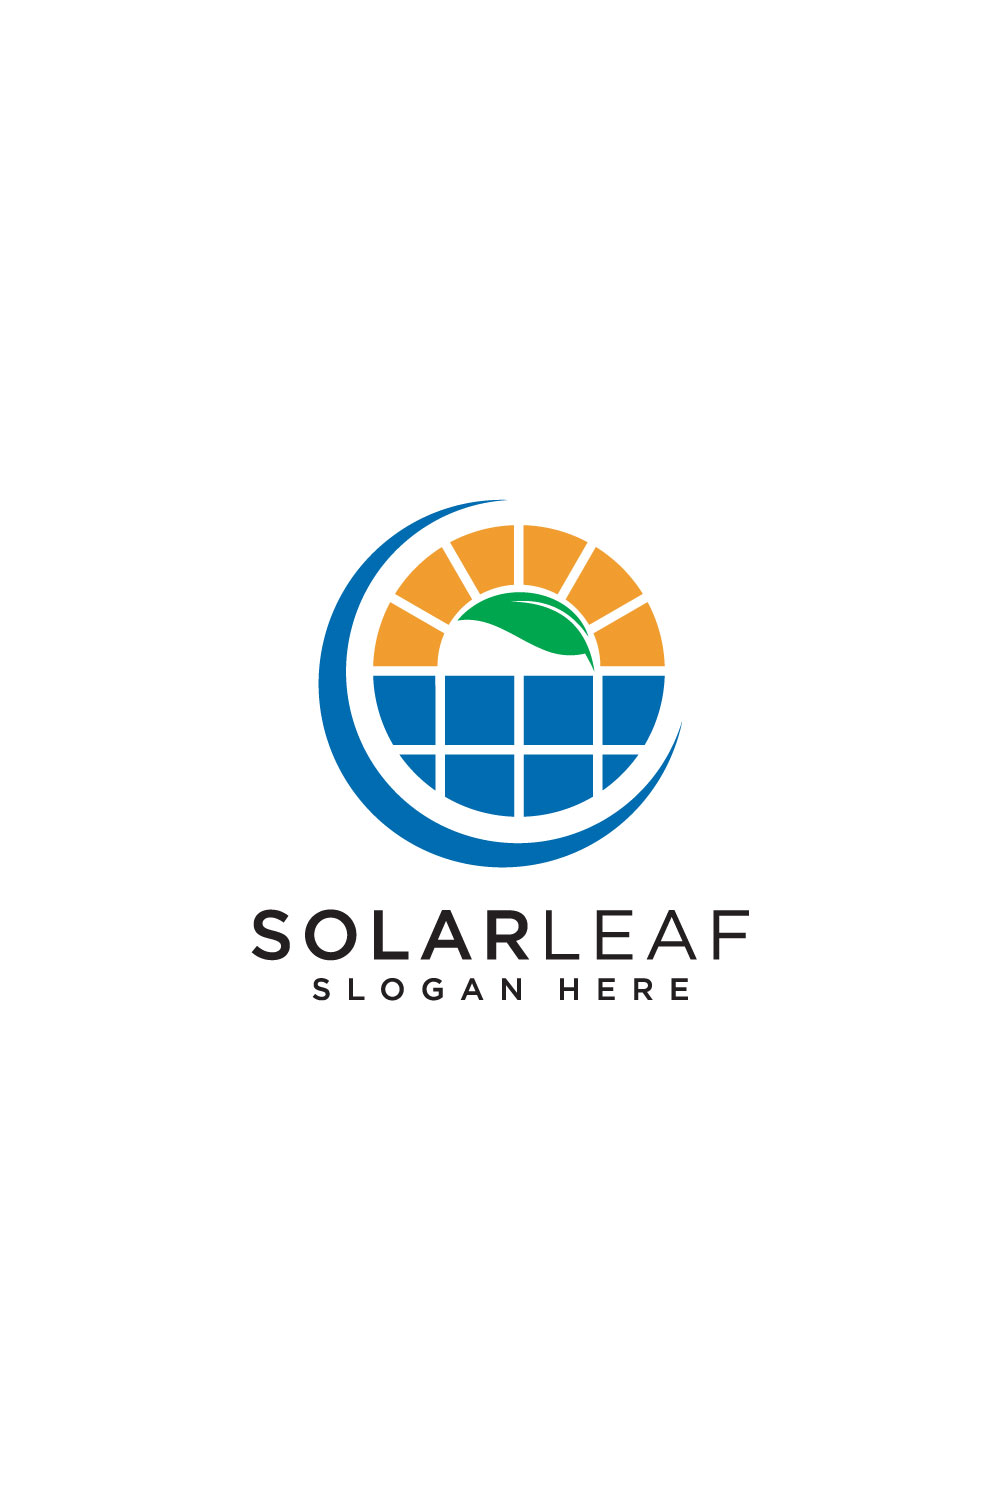 Solar Energy logo design vector pinterest preview image.